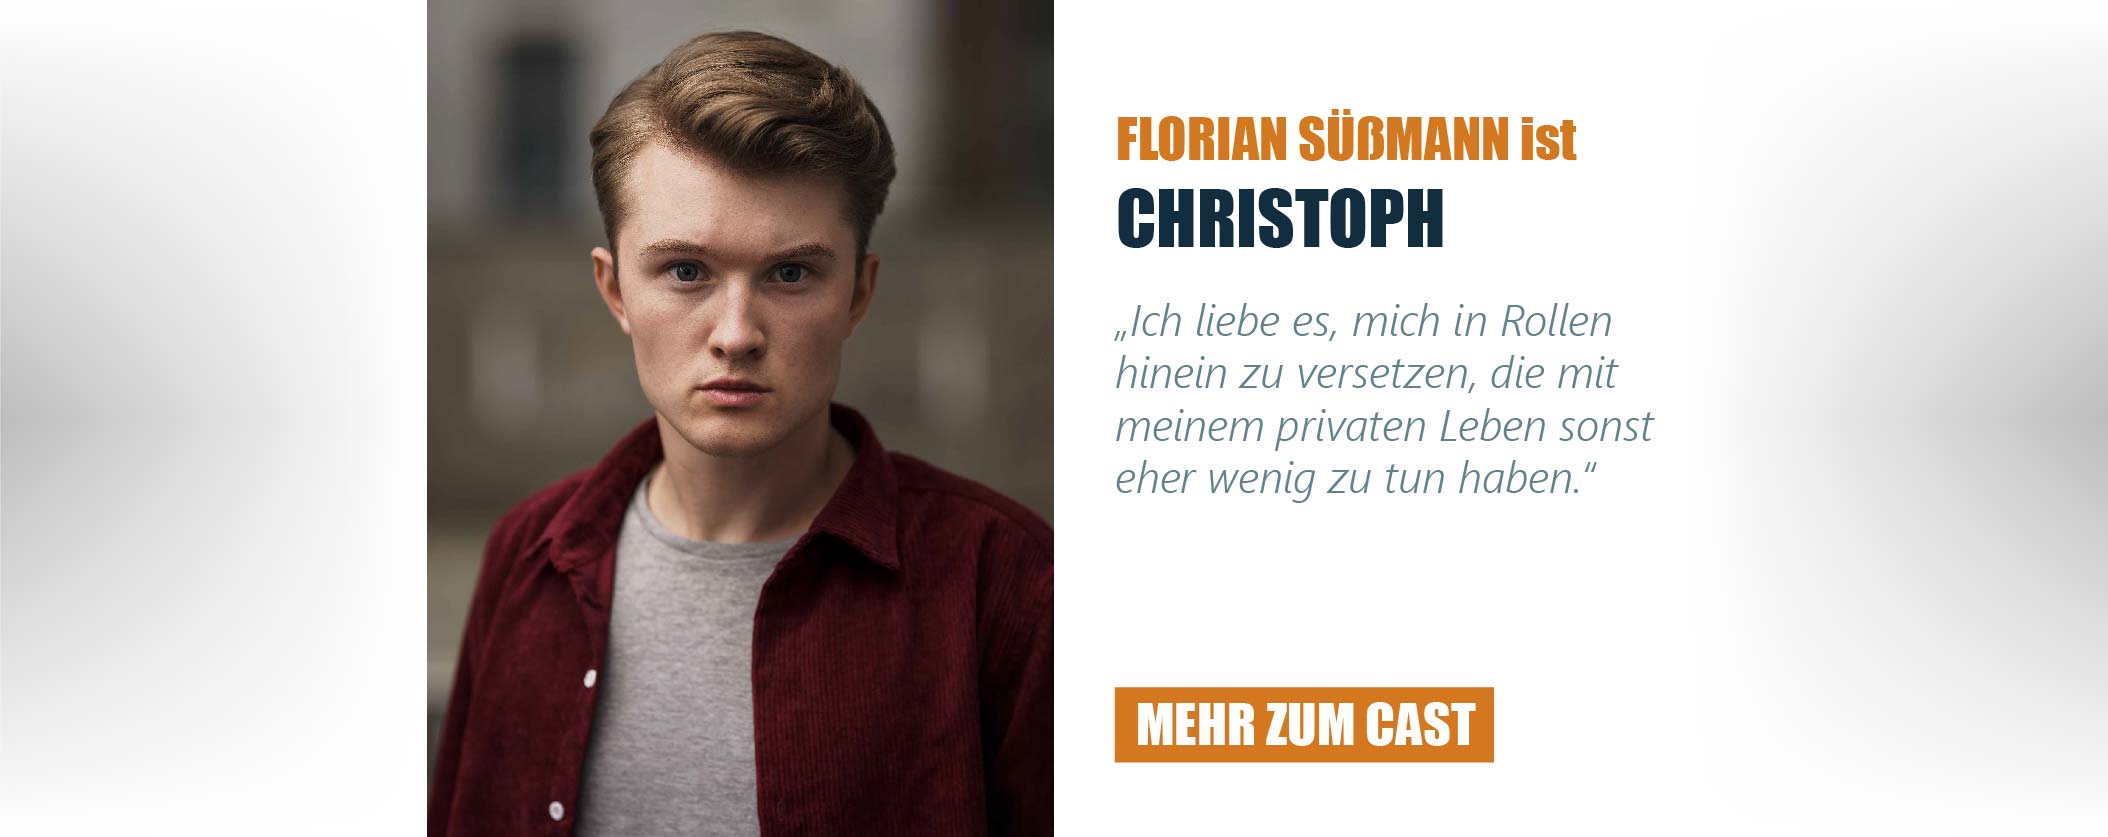 Der Schauspieler Florian Süßmann ist Christoph